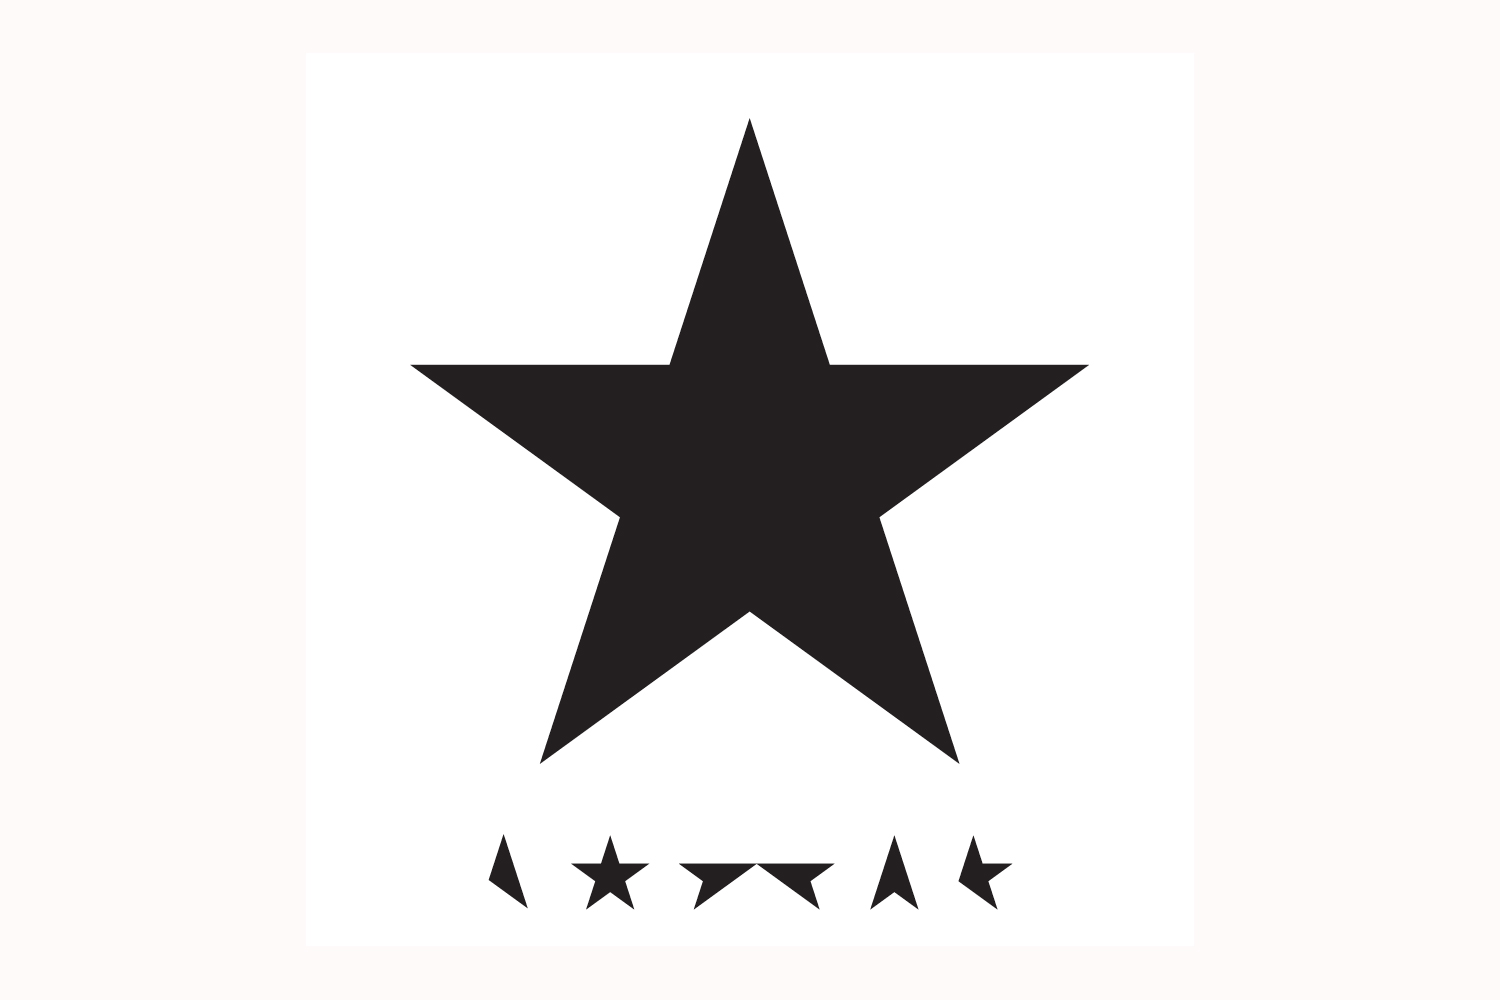 David Bowie - Blackstar uncropped